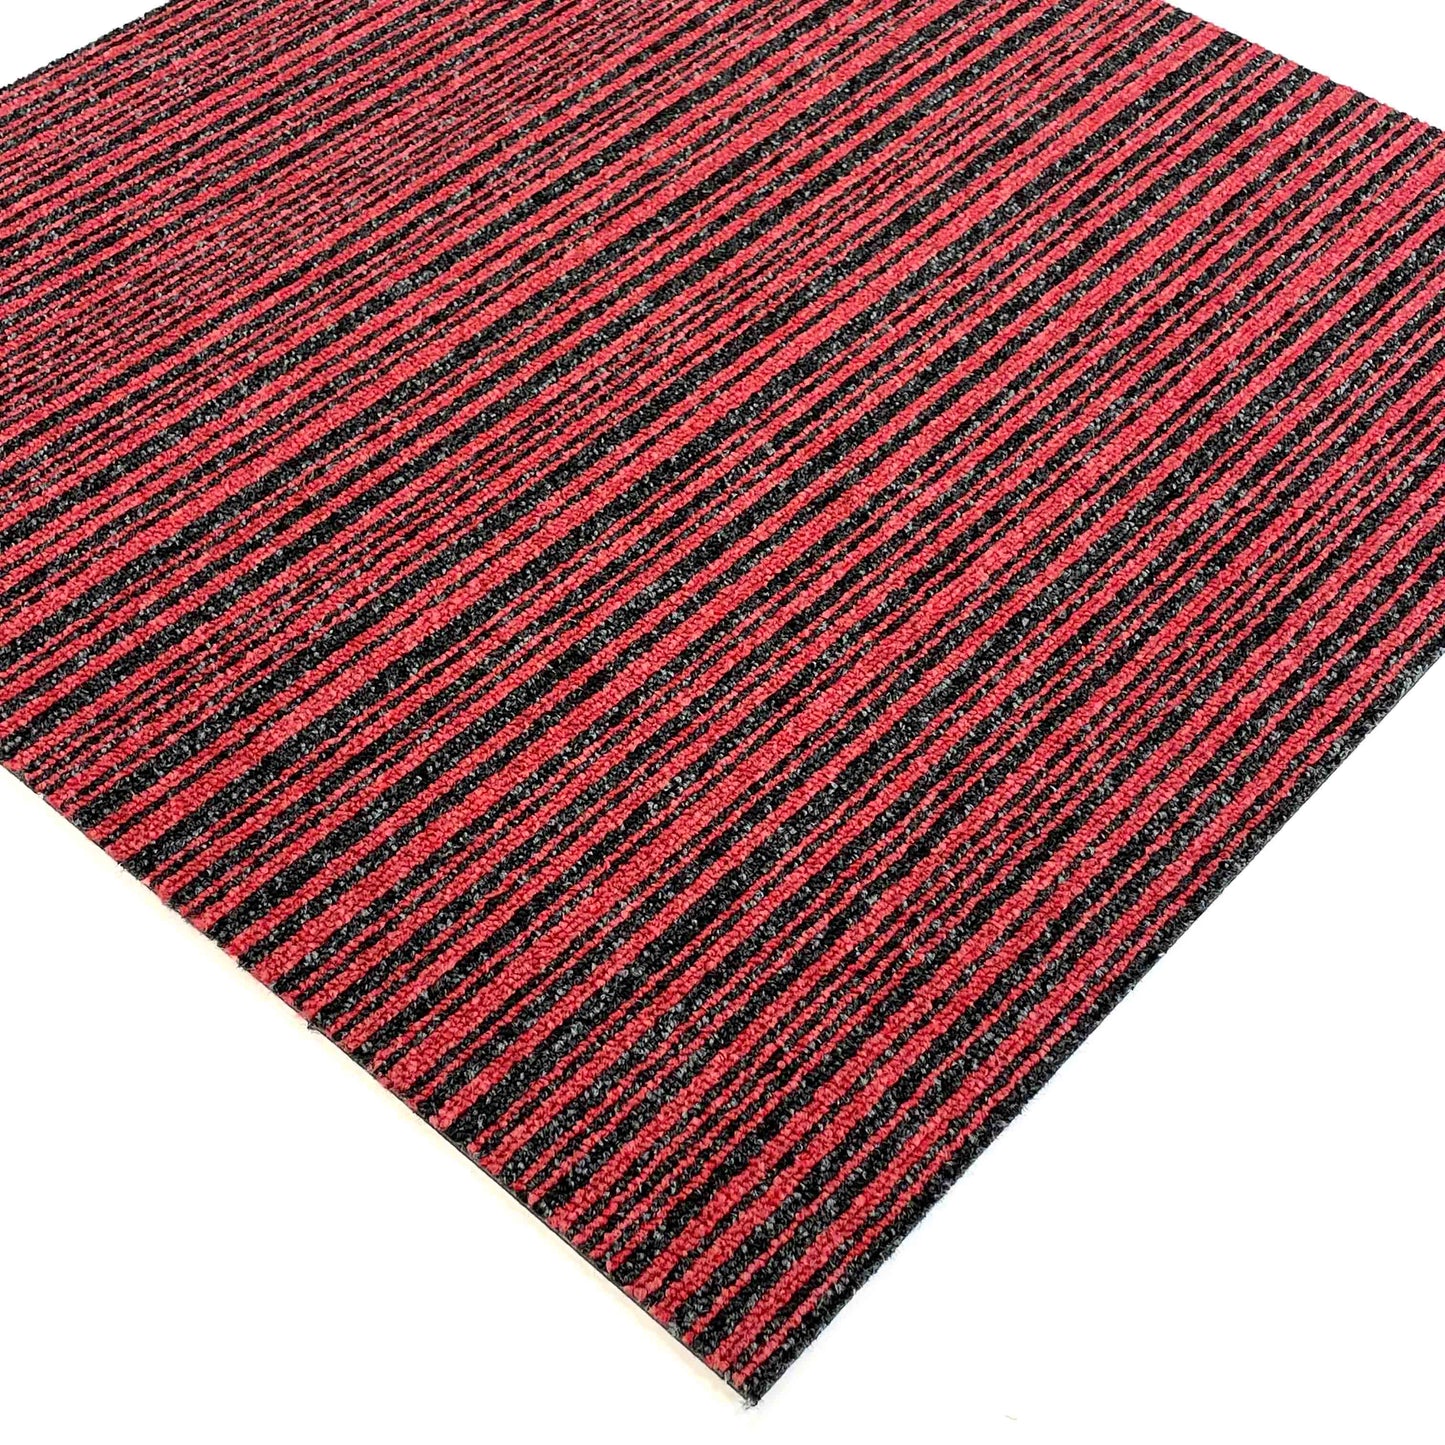 Red and Black Stripe Carpet Tiles